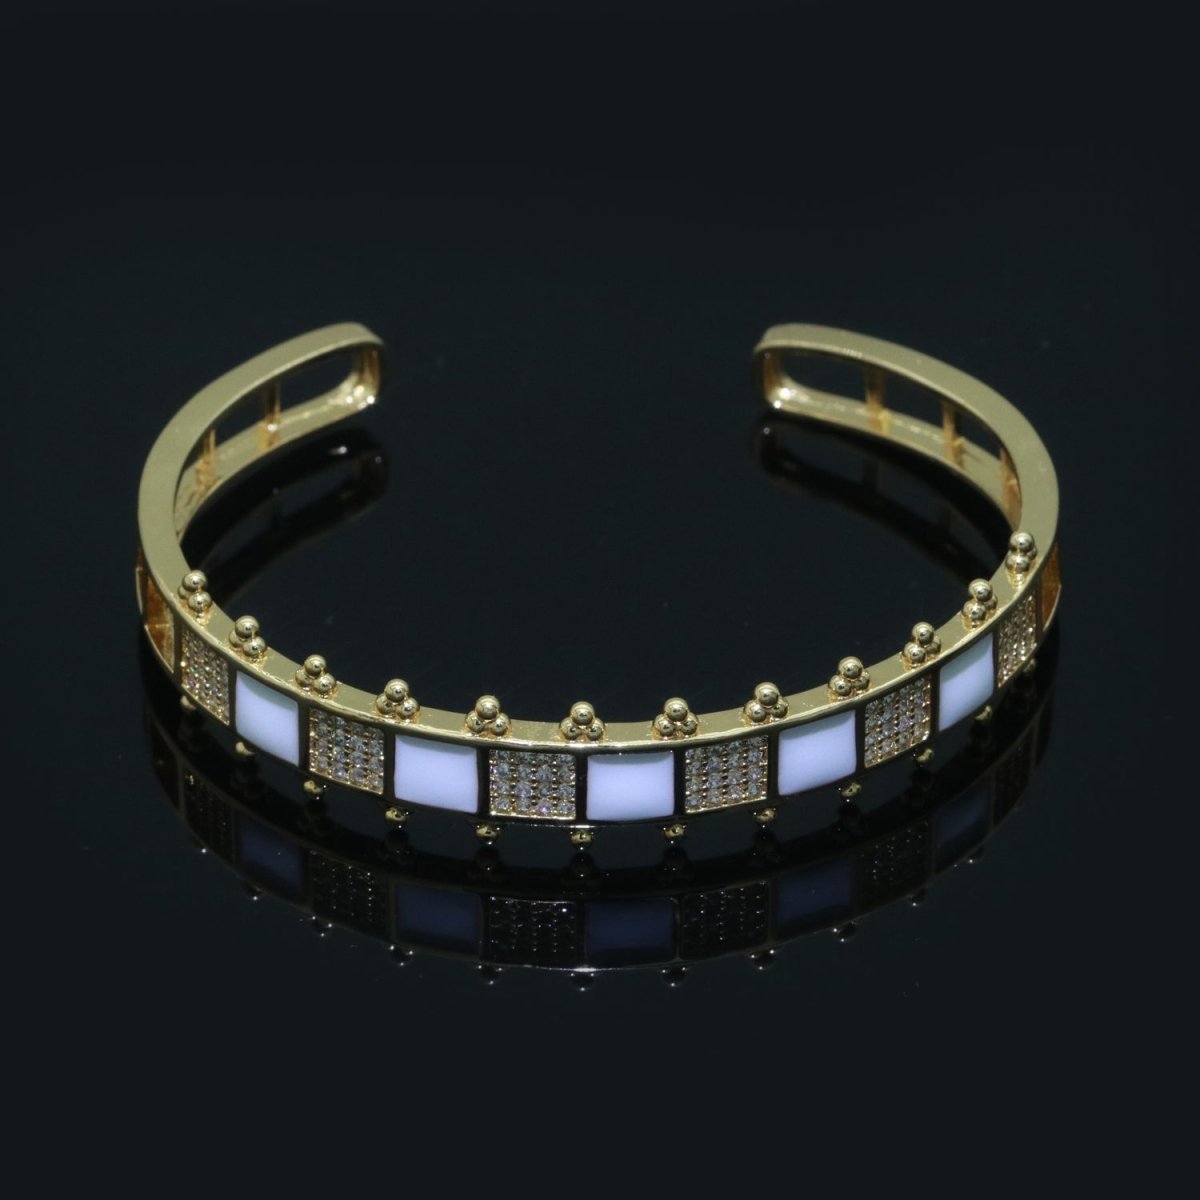 Micro Pave Checker Cuff Bracelet, 14K Gold Filled Bangle Enamel Bracelet Adjustable Bracelet | WA-163 to WA-172 Clearance Pricing - DLUXCA